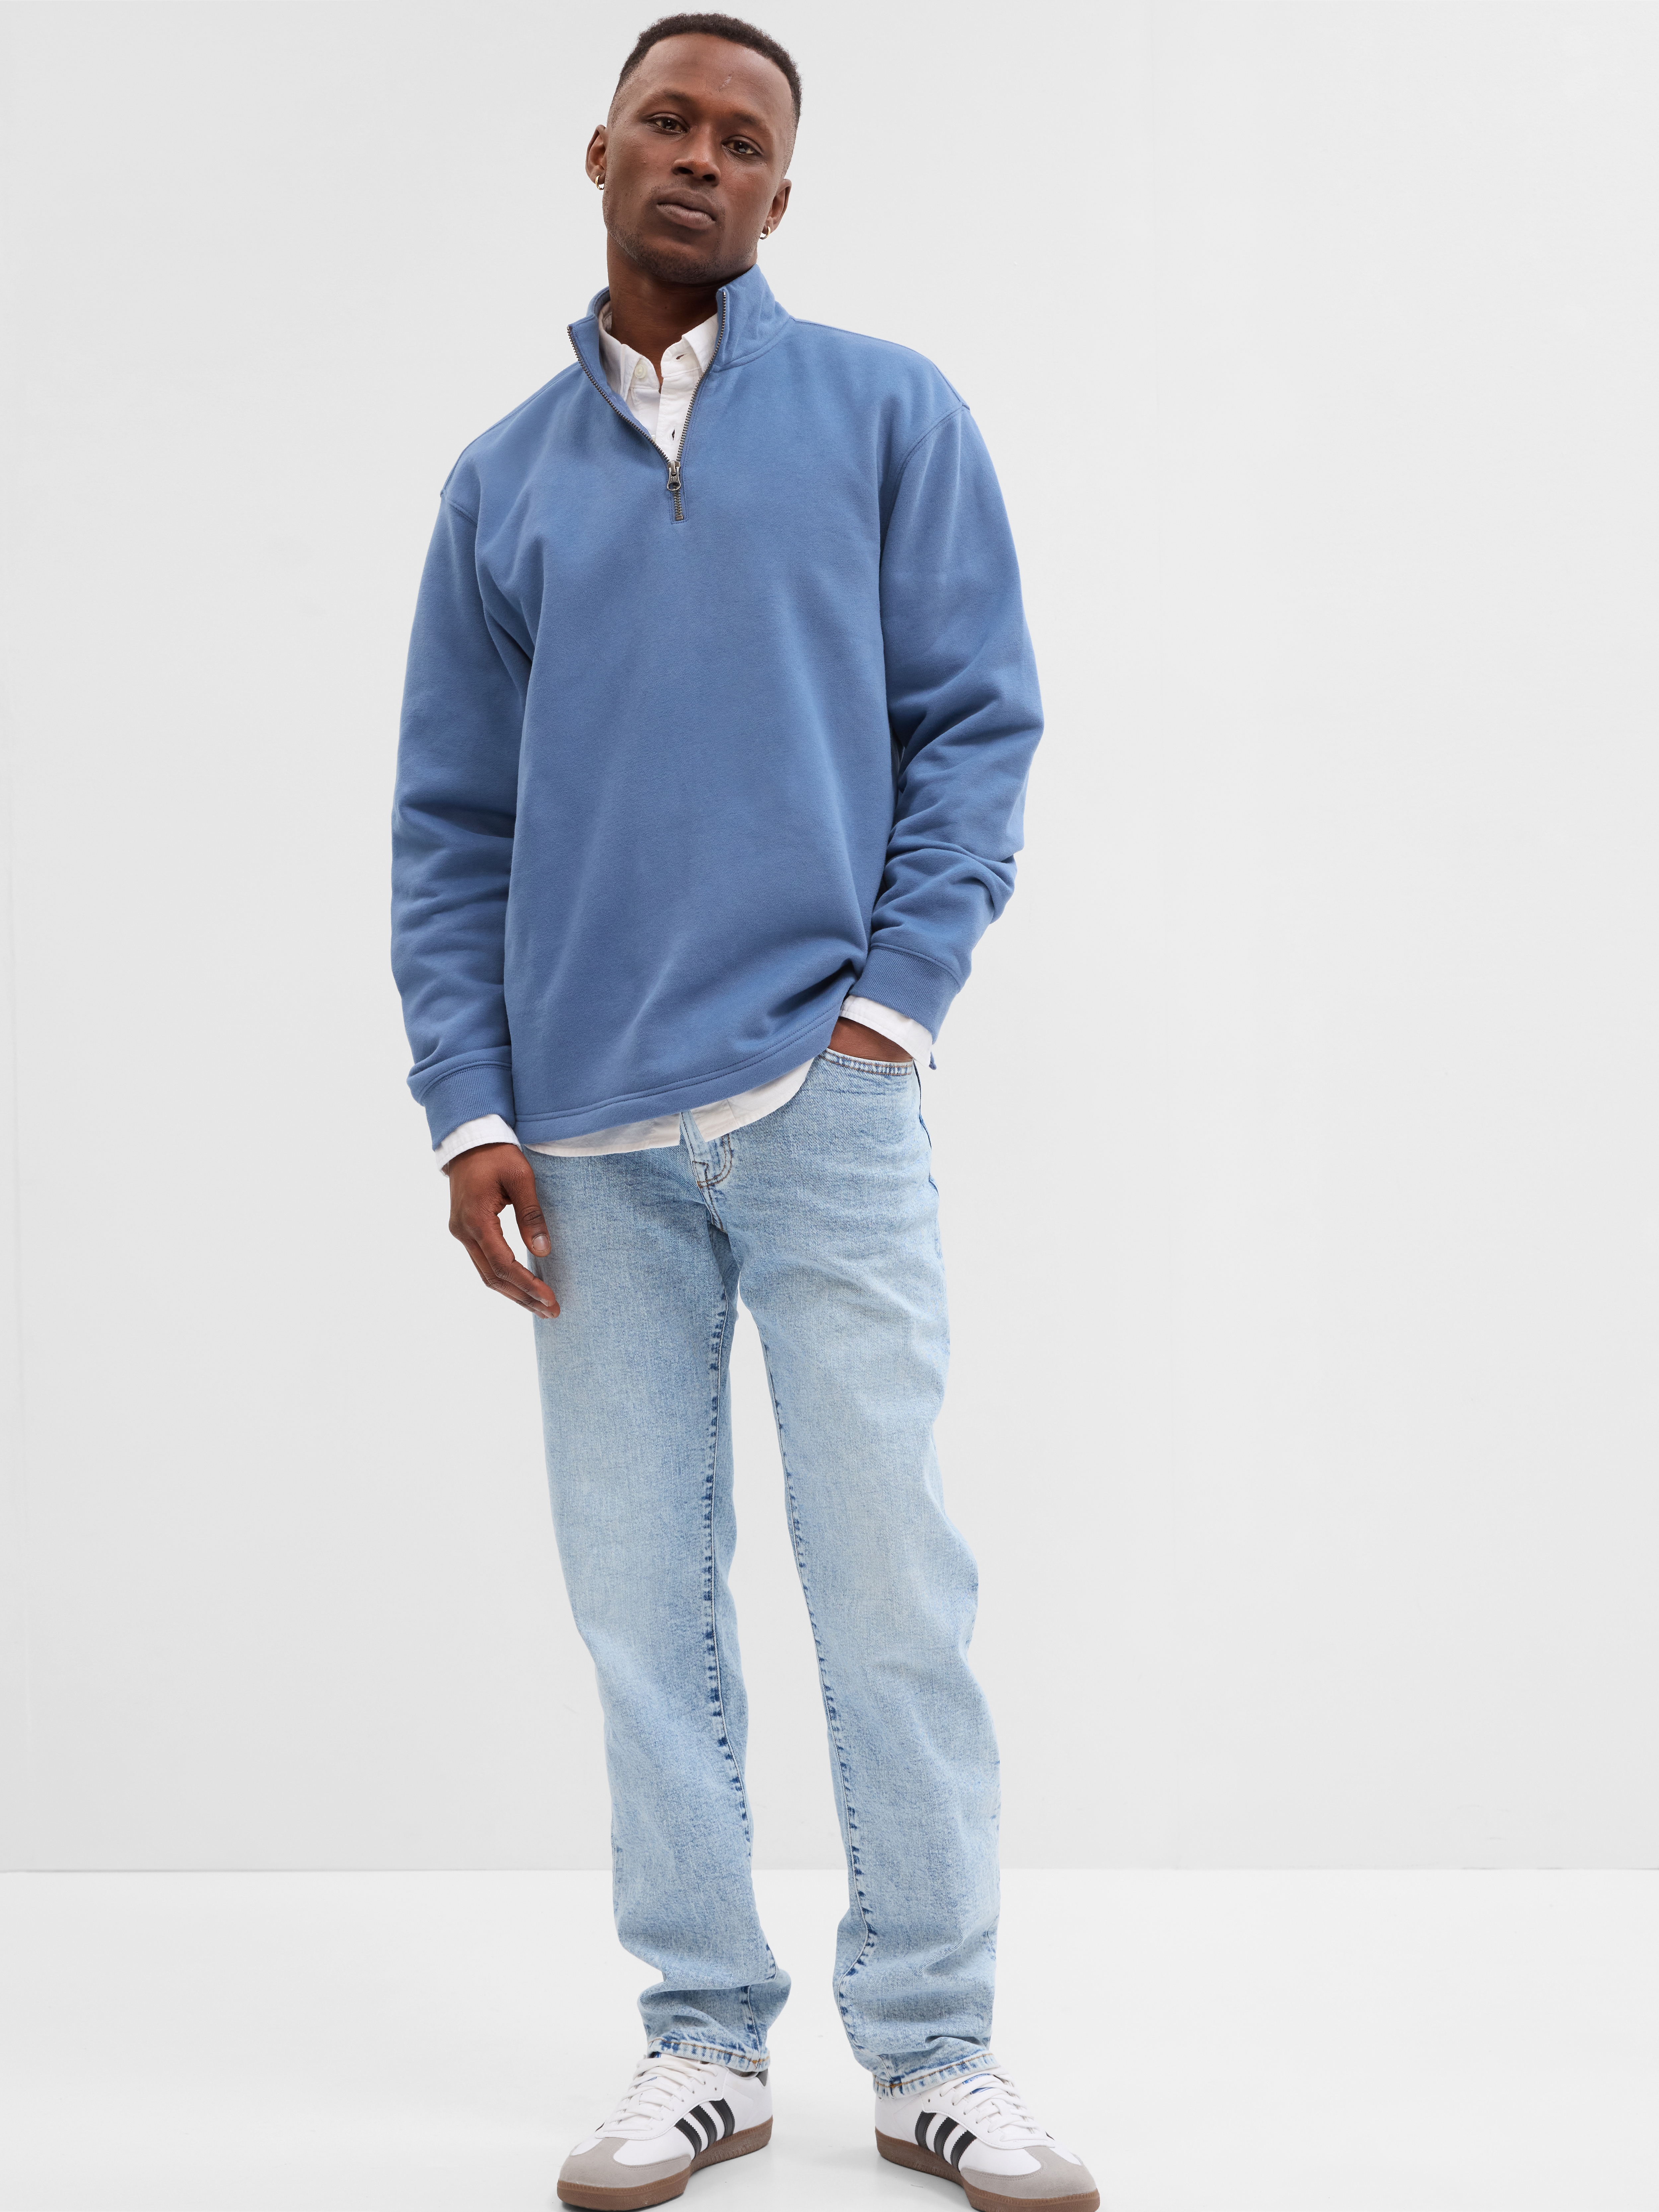 Vintage Soft Quarter-Zip Sweatshirt | Gap Factory